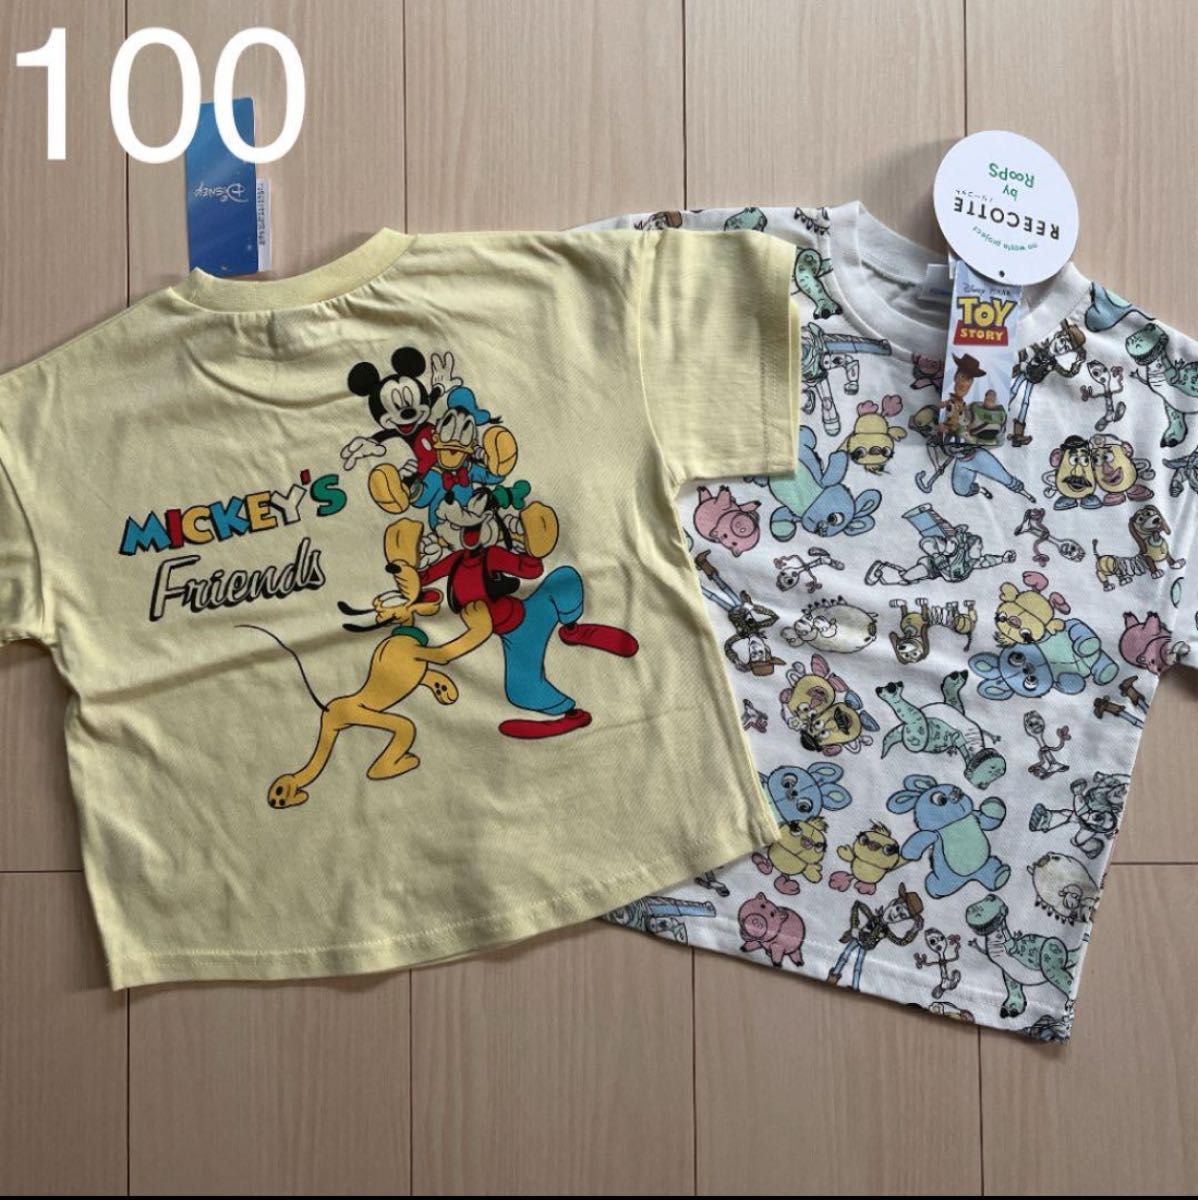 【Disney】ディズニー ミッキーフレンズ☆ピクサー トイストーリー Tシャツ 黄色 総柄 キャラクター 2点セット 100